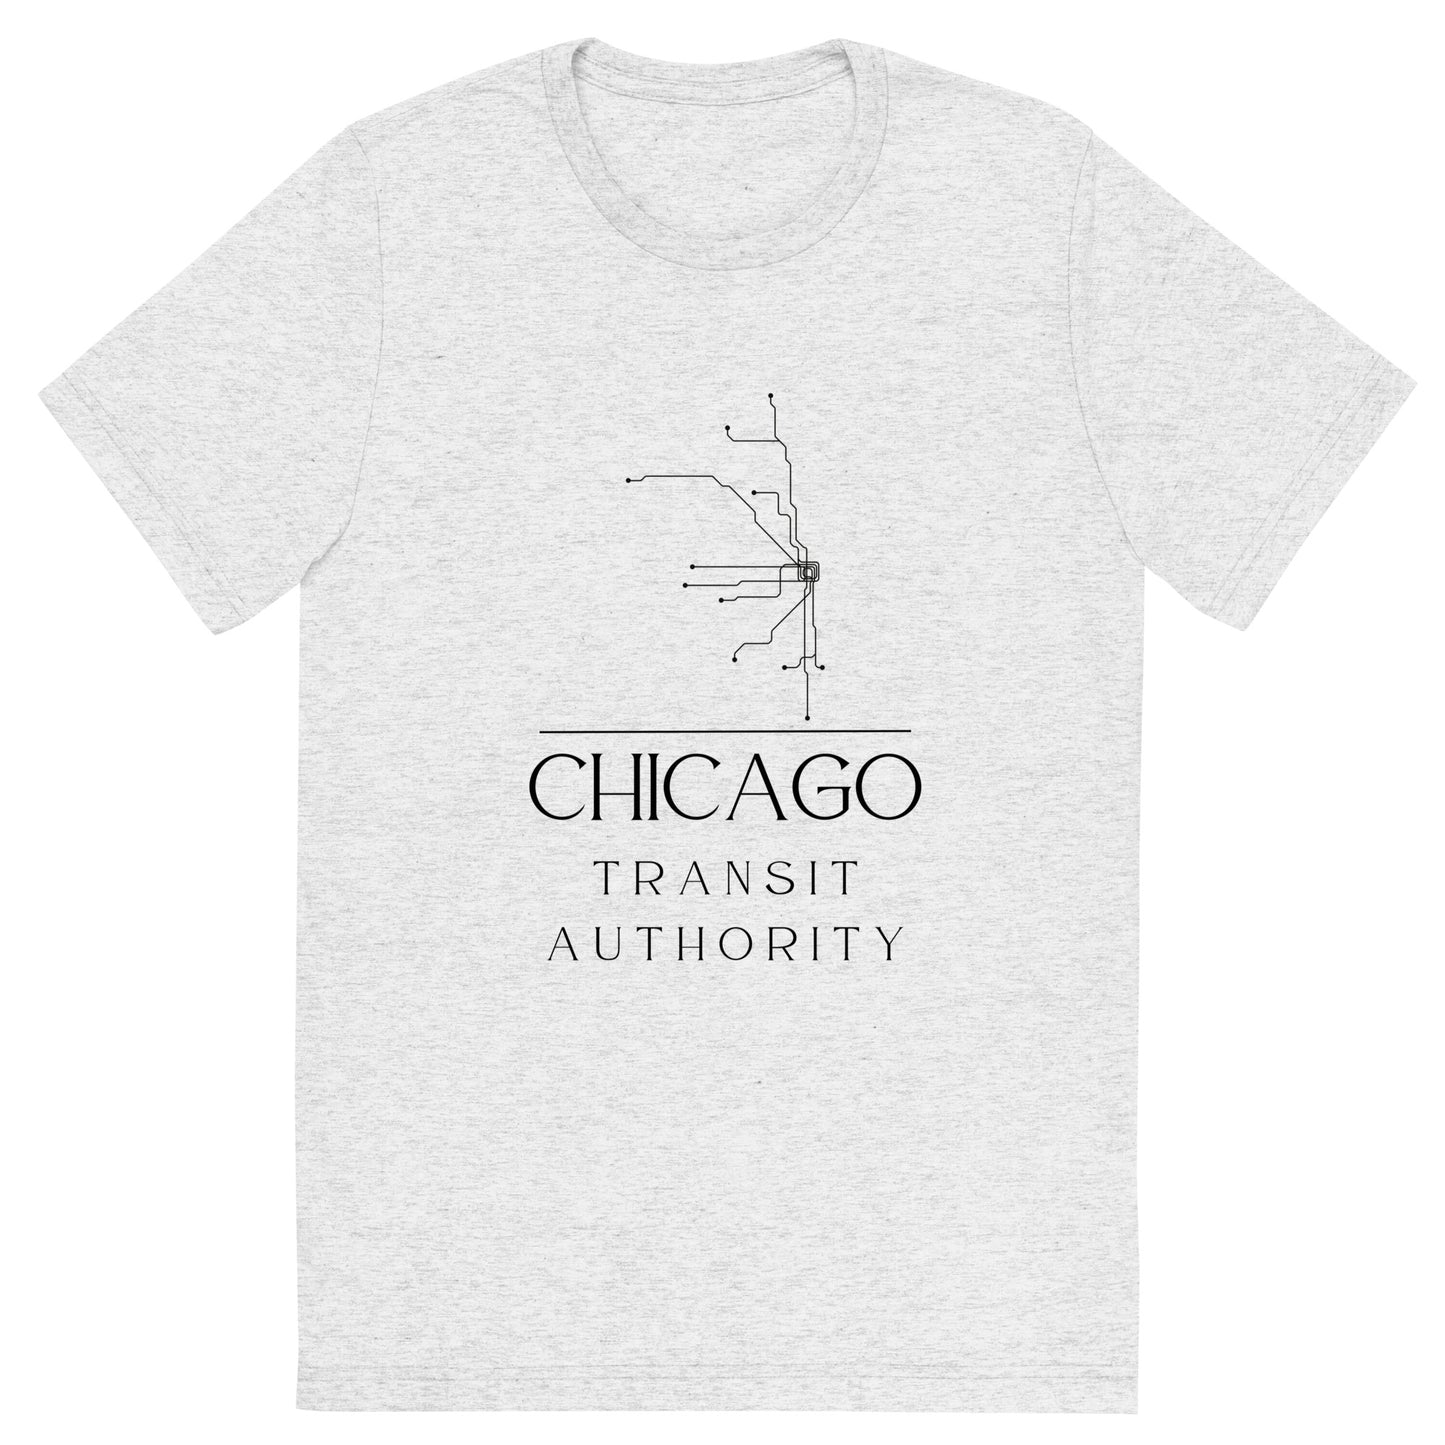 Chicago Transit Authority L - Short sleeve t-shirt